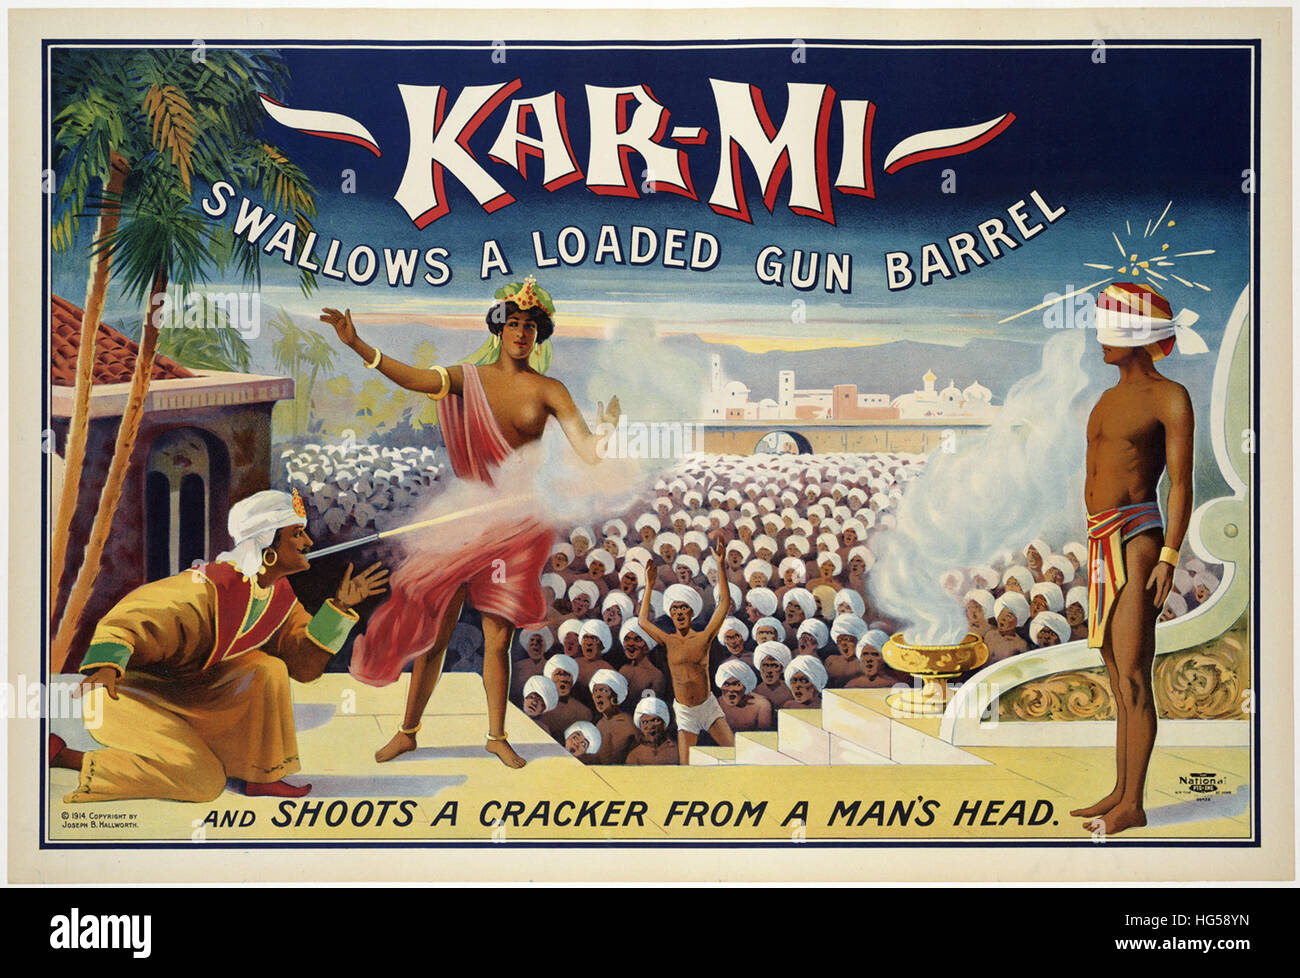 Circus Poster -  Kar-mi swallows a loaded gun barrel    and shoots a cracker from a man's head. Stock Photo